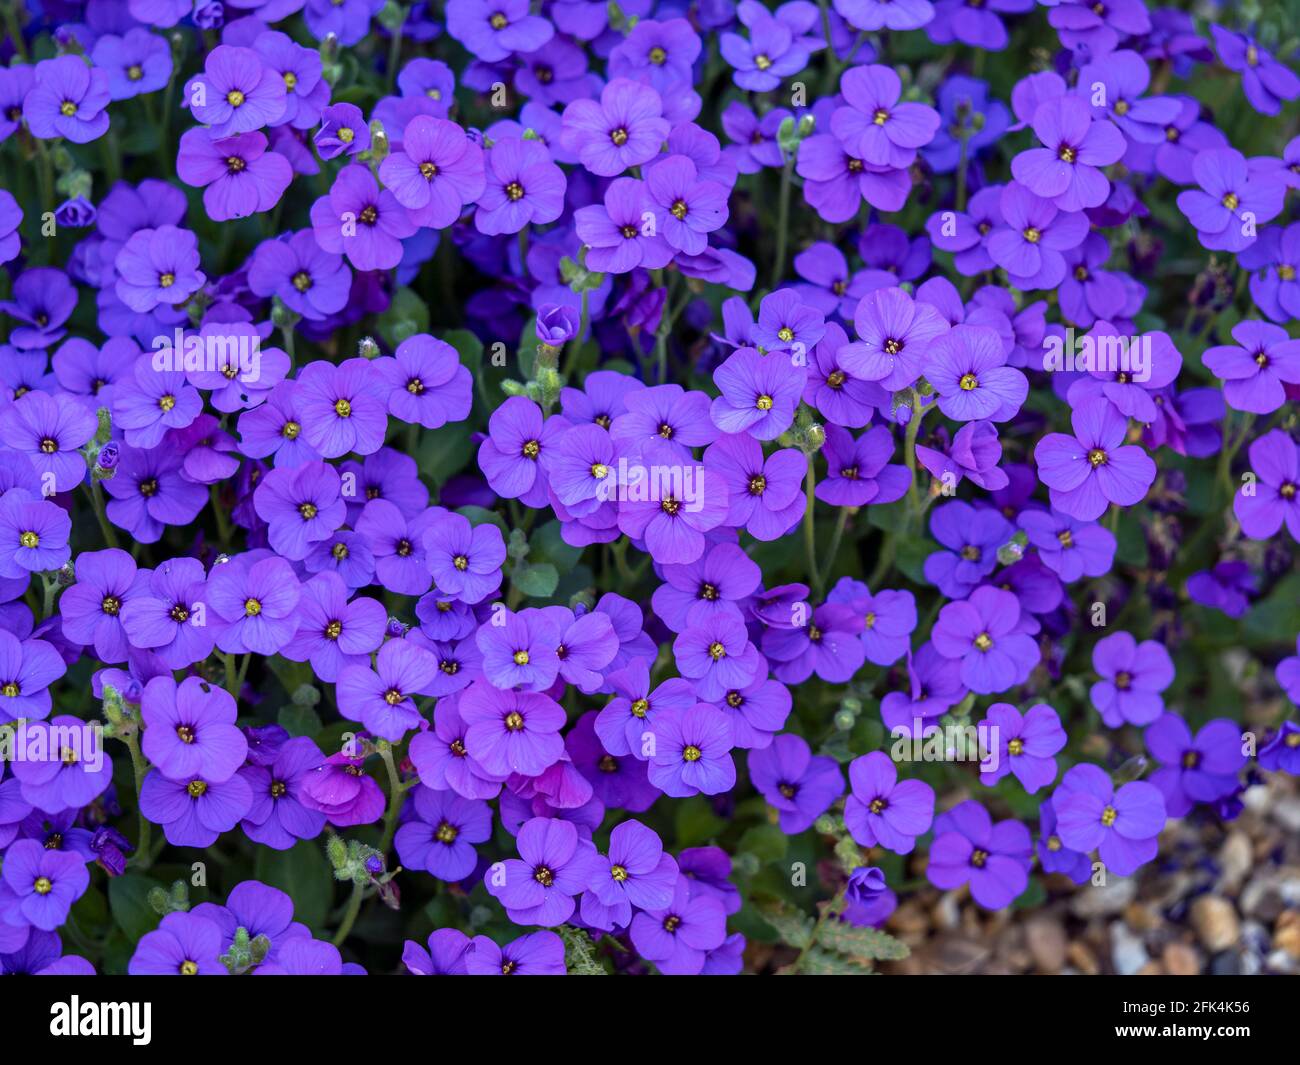 Clump of pretty purple Aubretia flowers in a garden Stock Photo